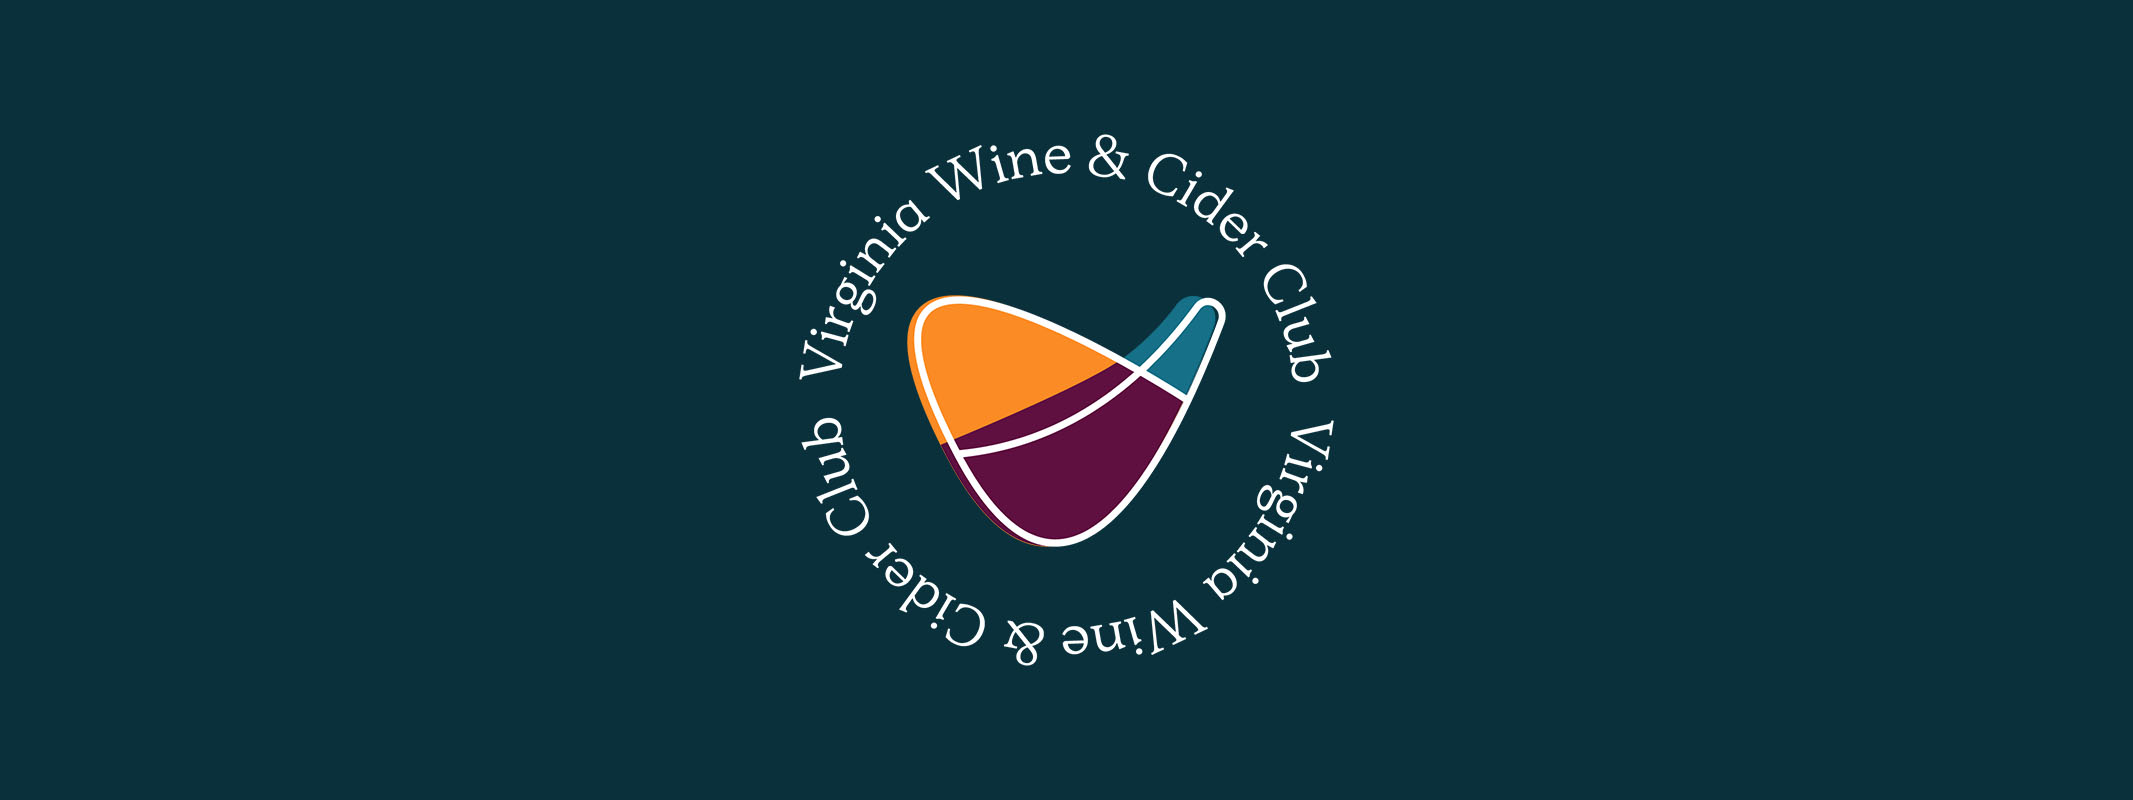 Virginia Wine Club logo superimposed onto a hunter green background 